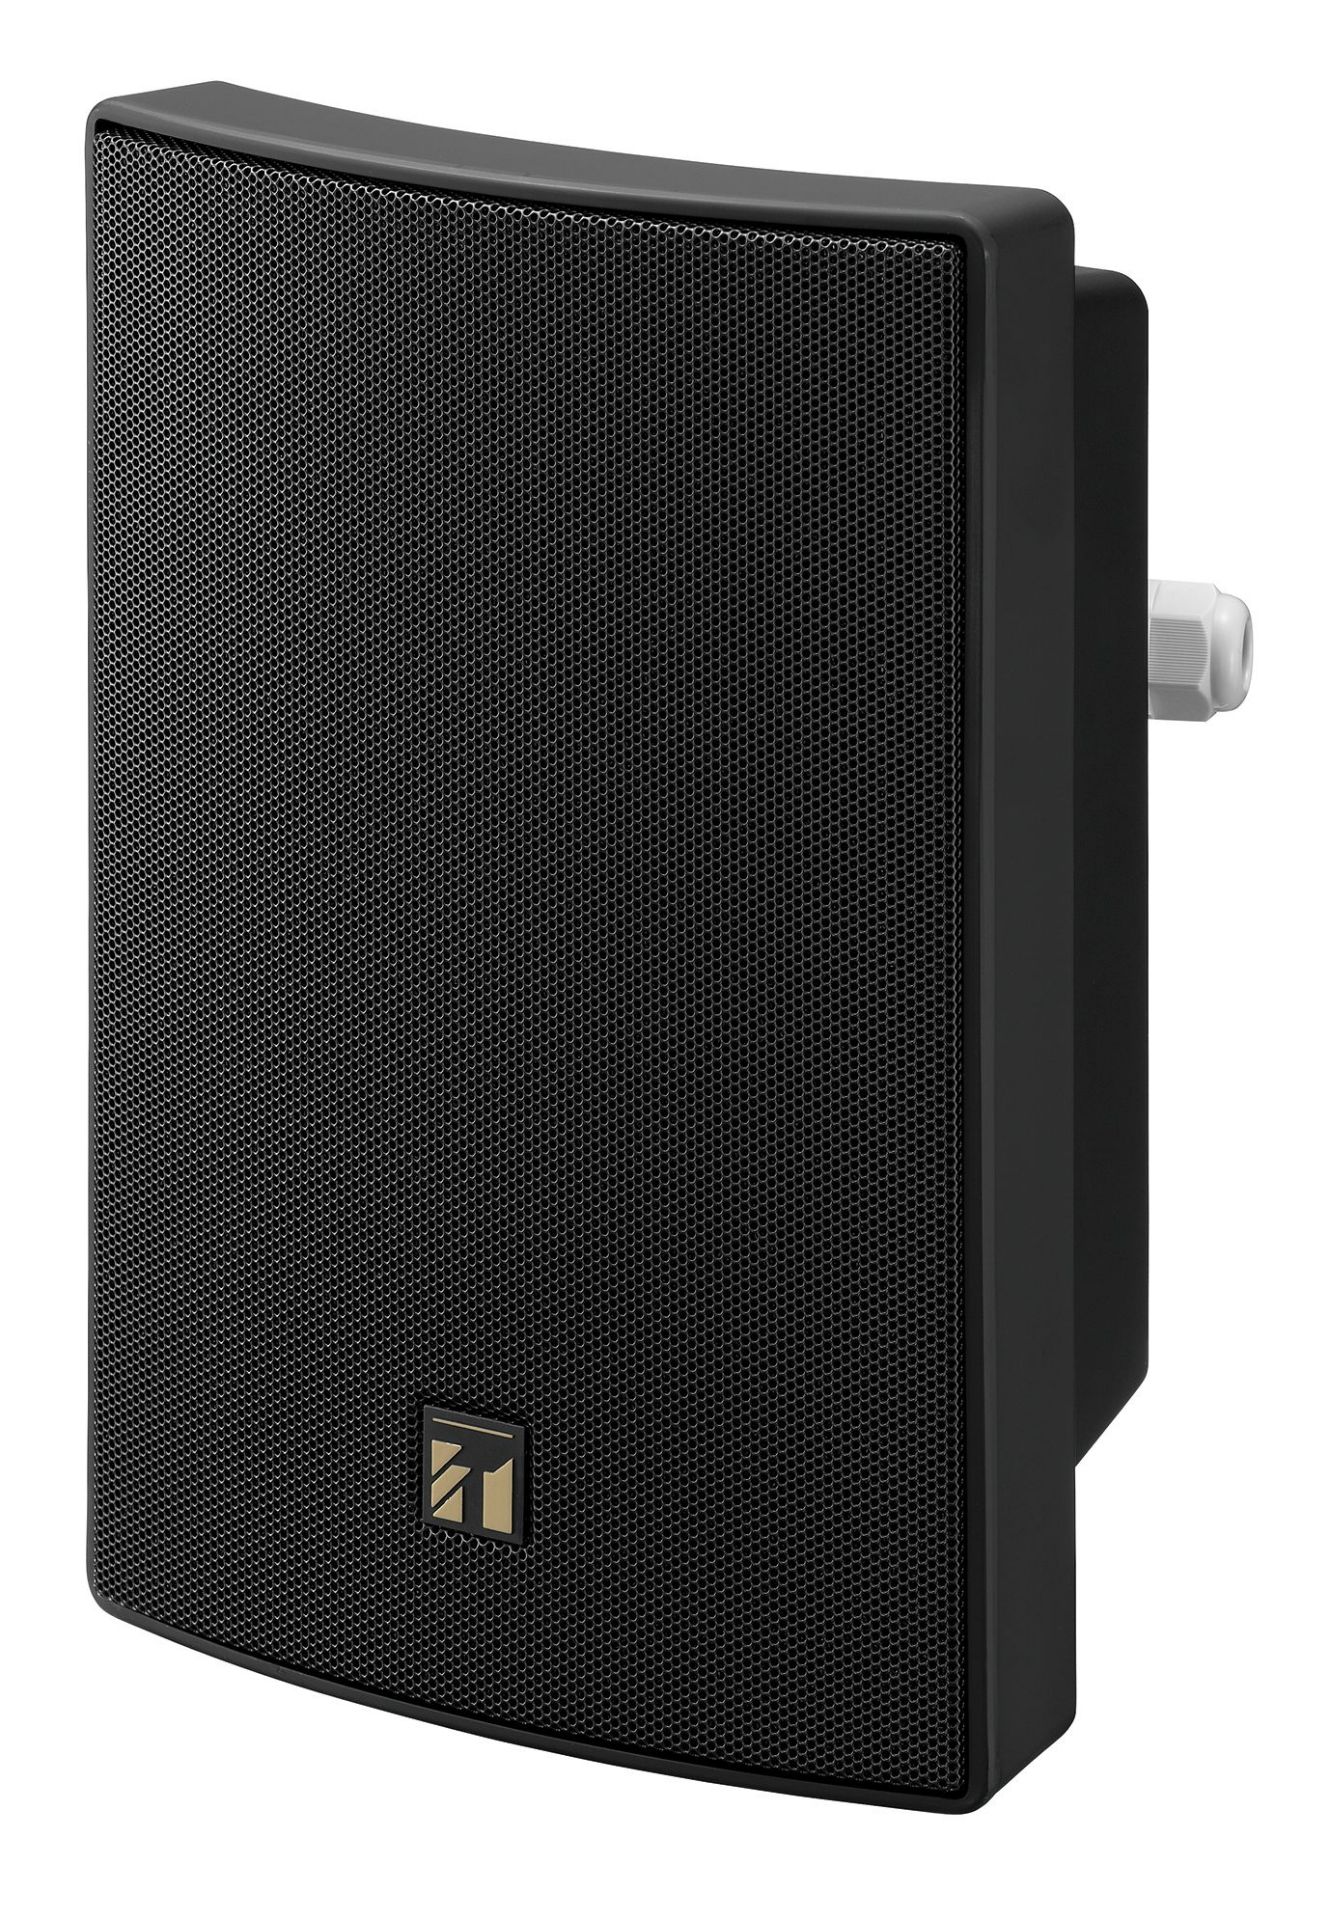 RR)P £100 TOA BS-1015BSB Box Speaker - Black